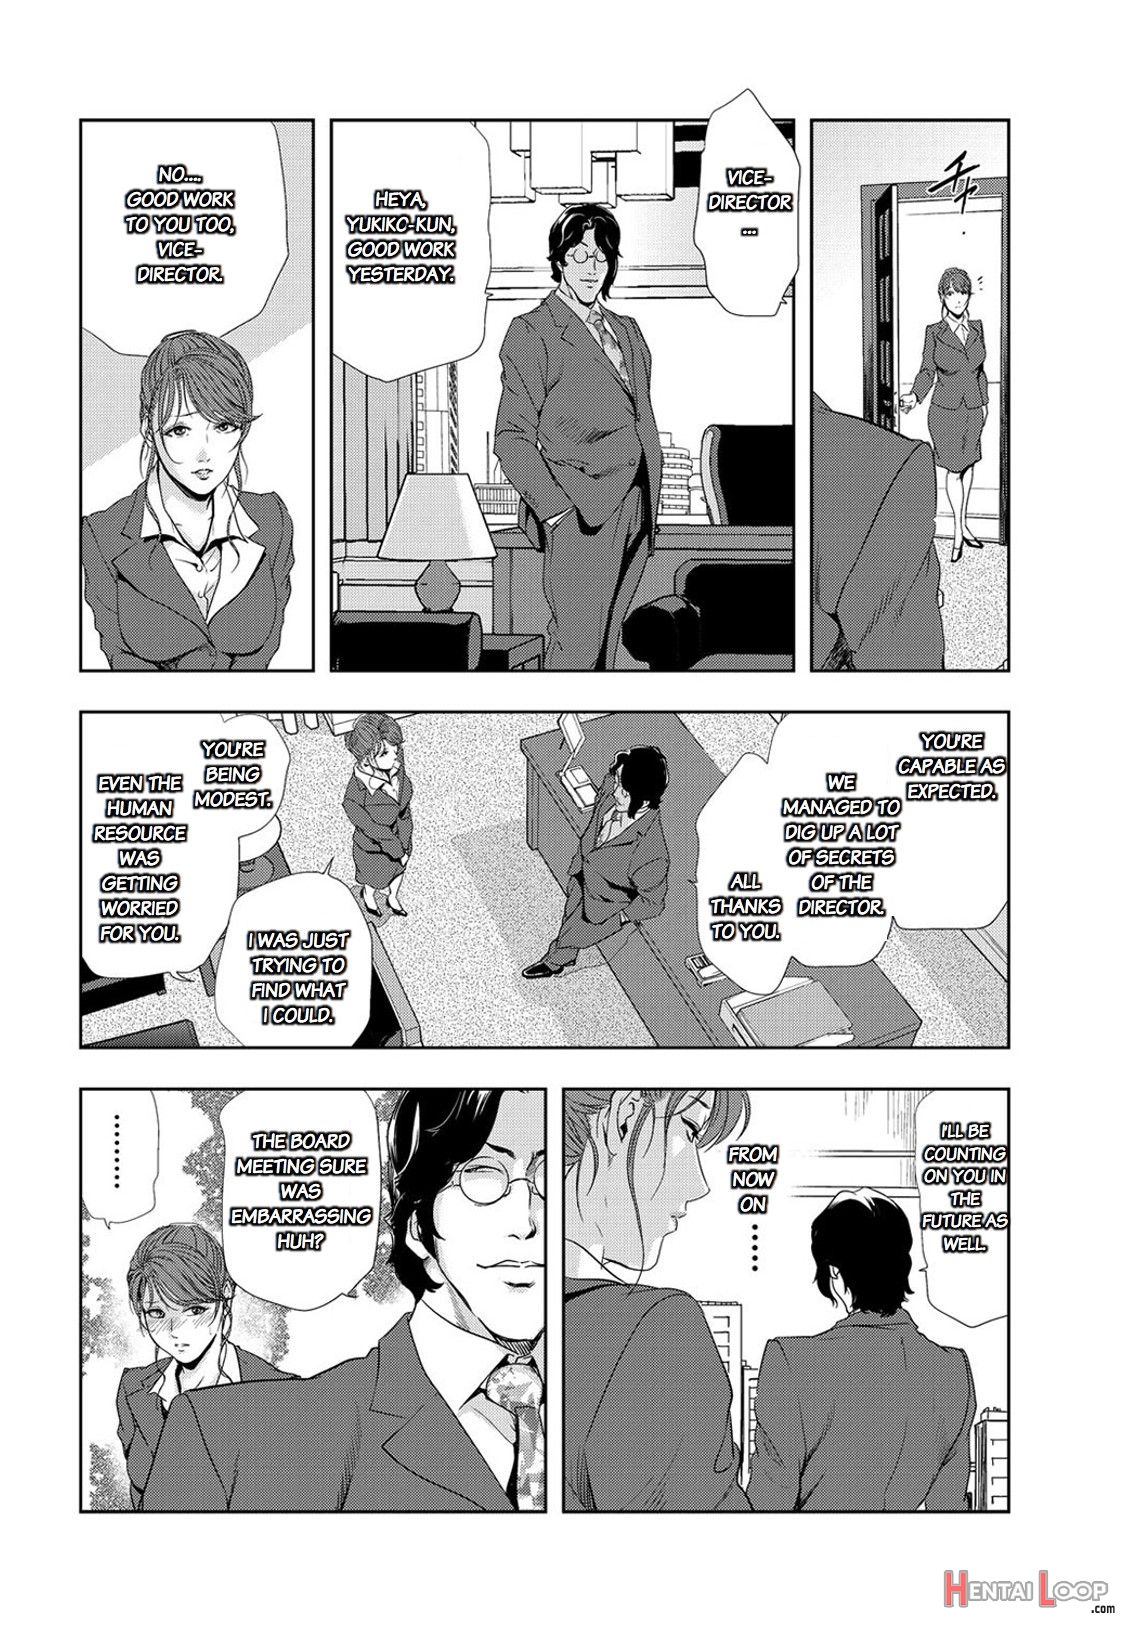 Nikuhisyo Yukiko Chapter 25-2 page 8